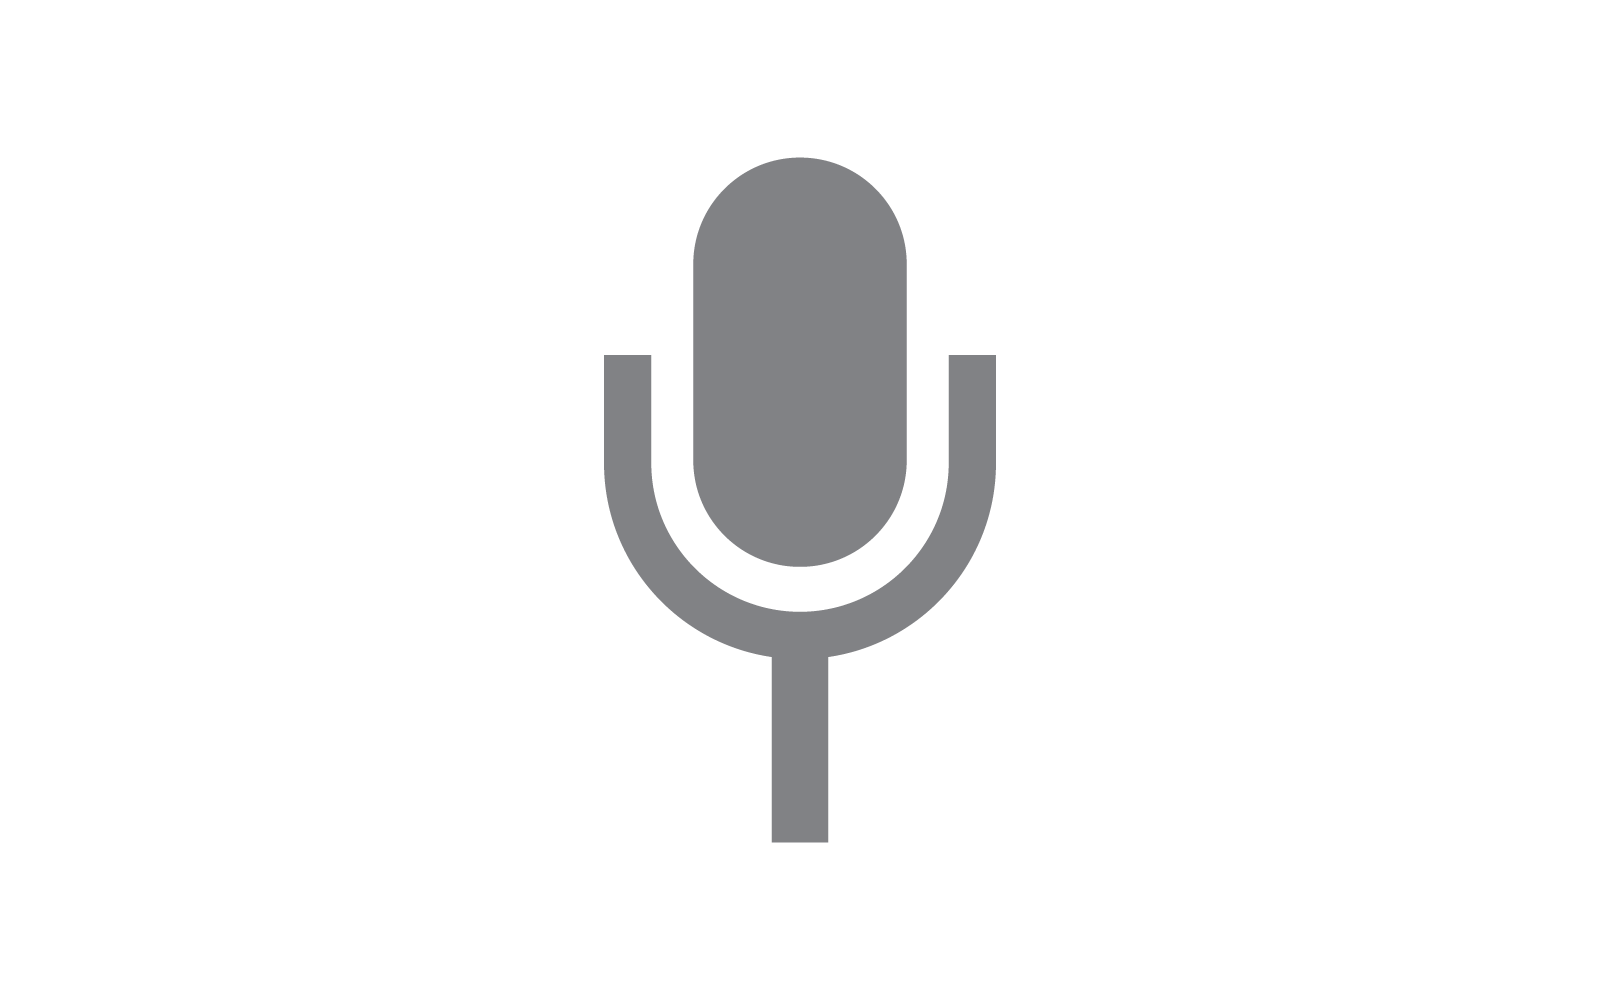 Microphone music logo vector template